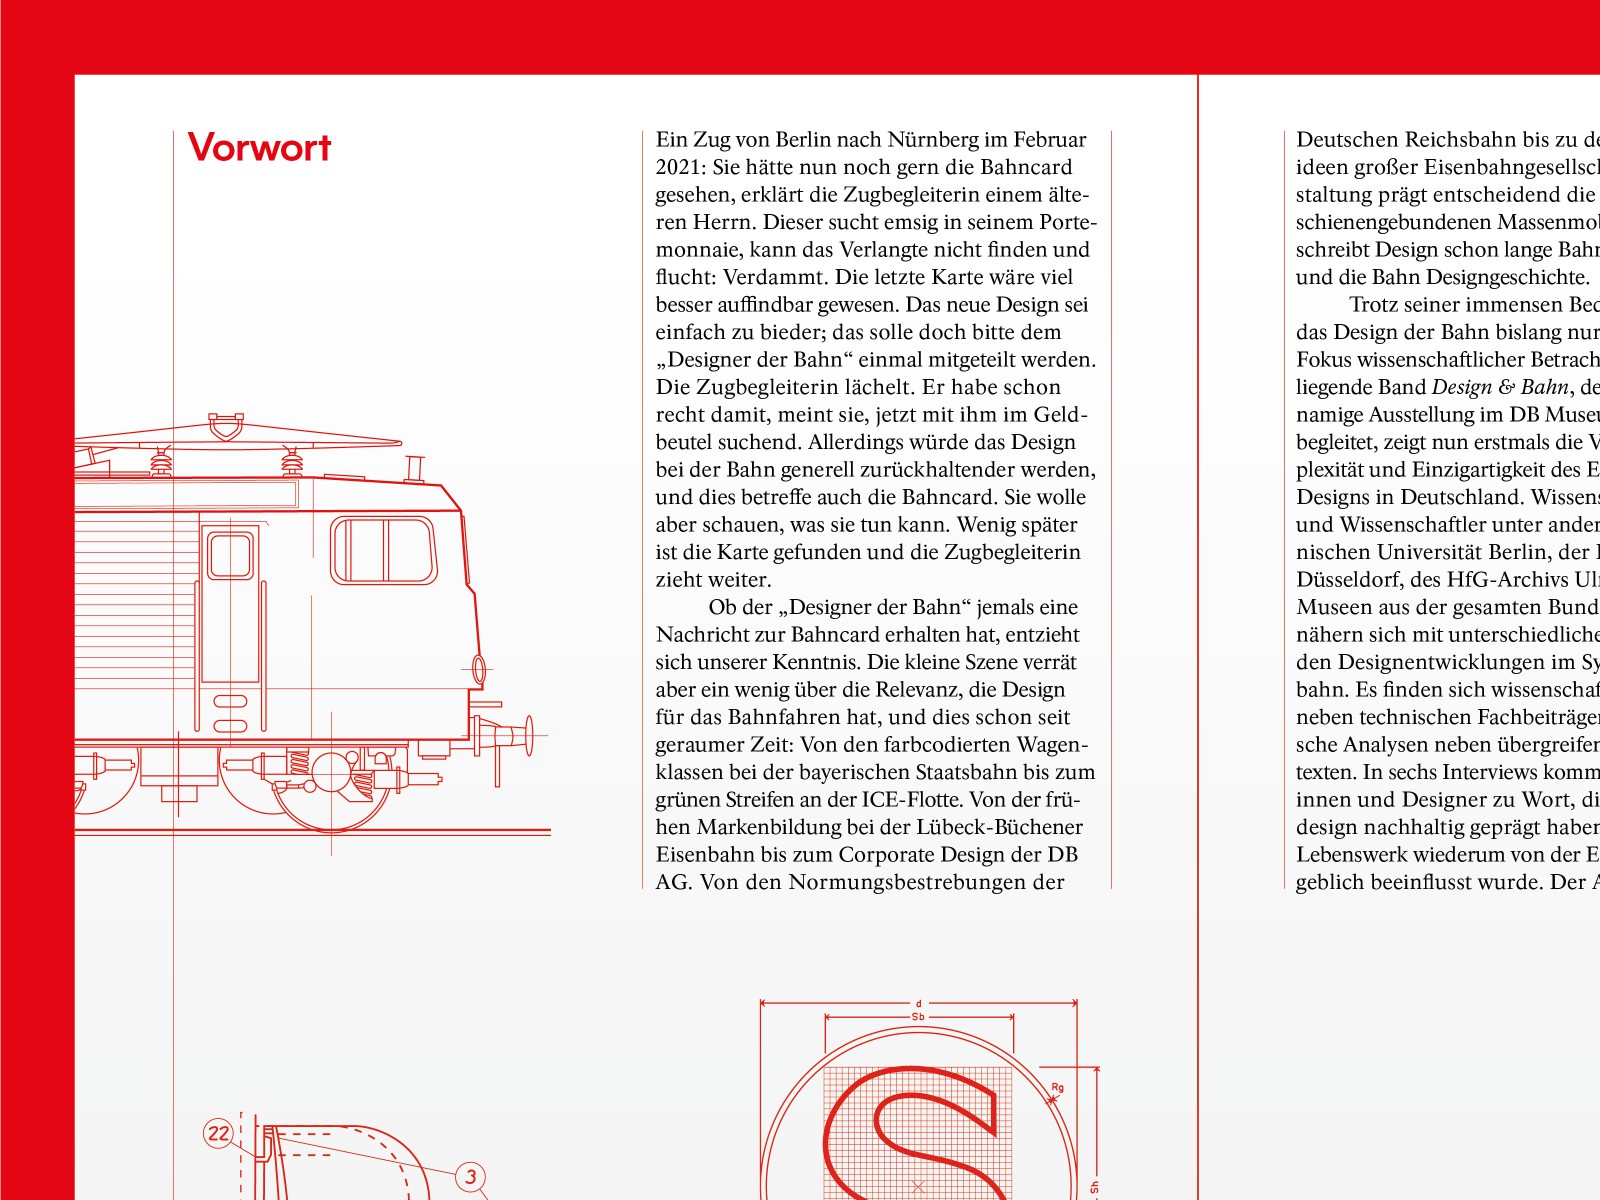 vista | Of locomotives and logos